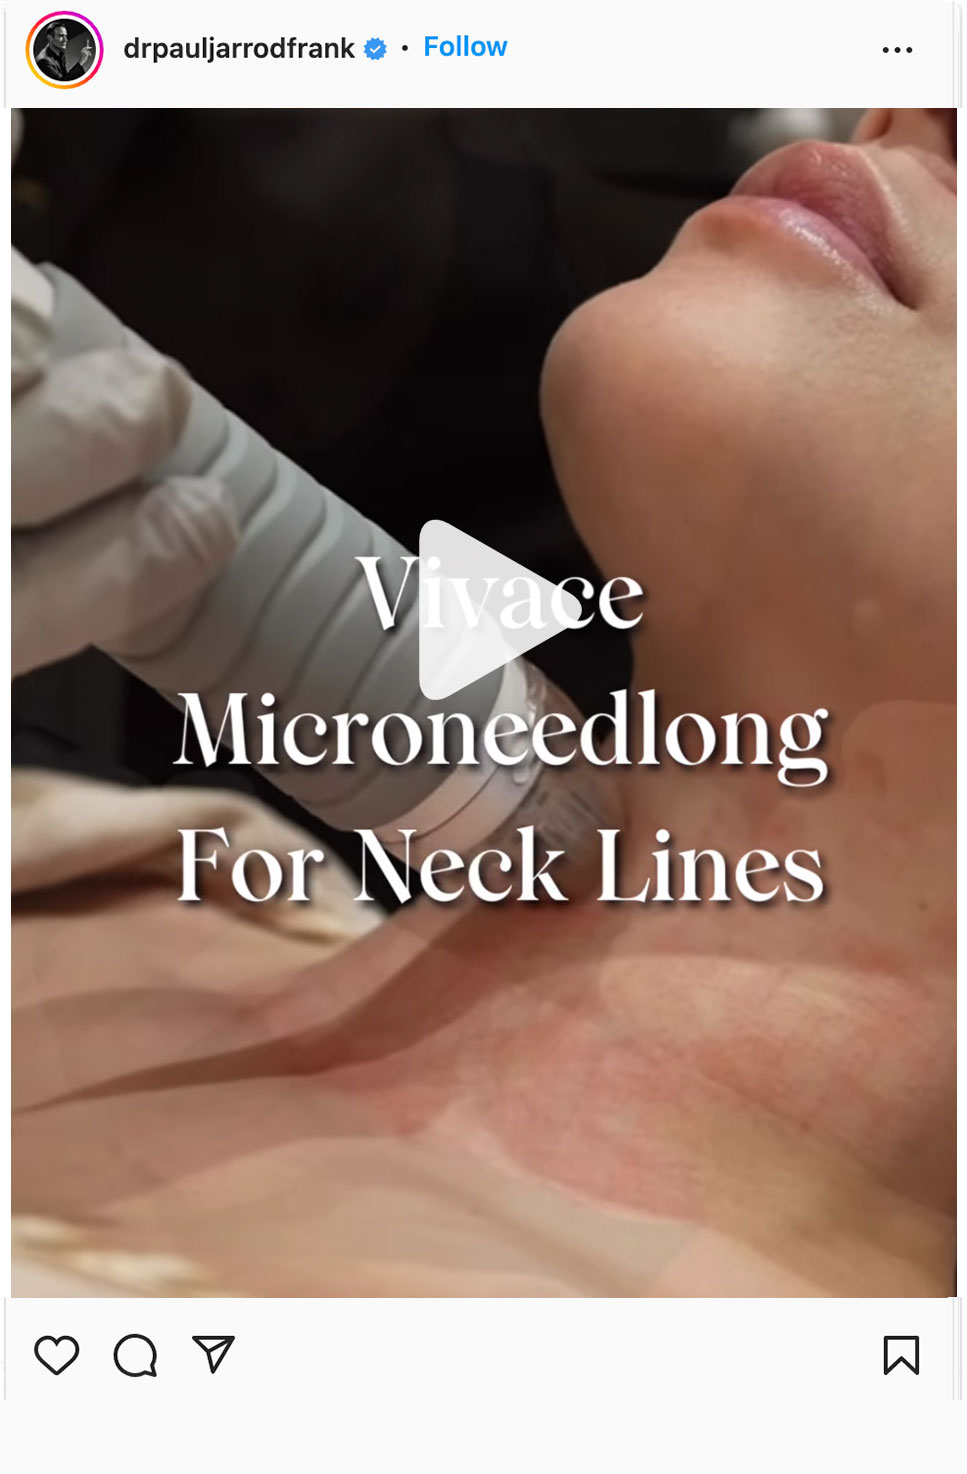 vivace microneedling neck